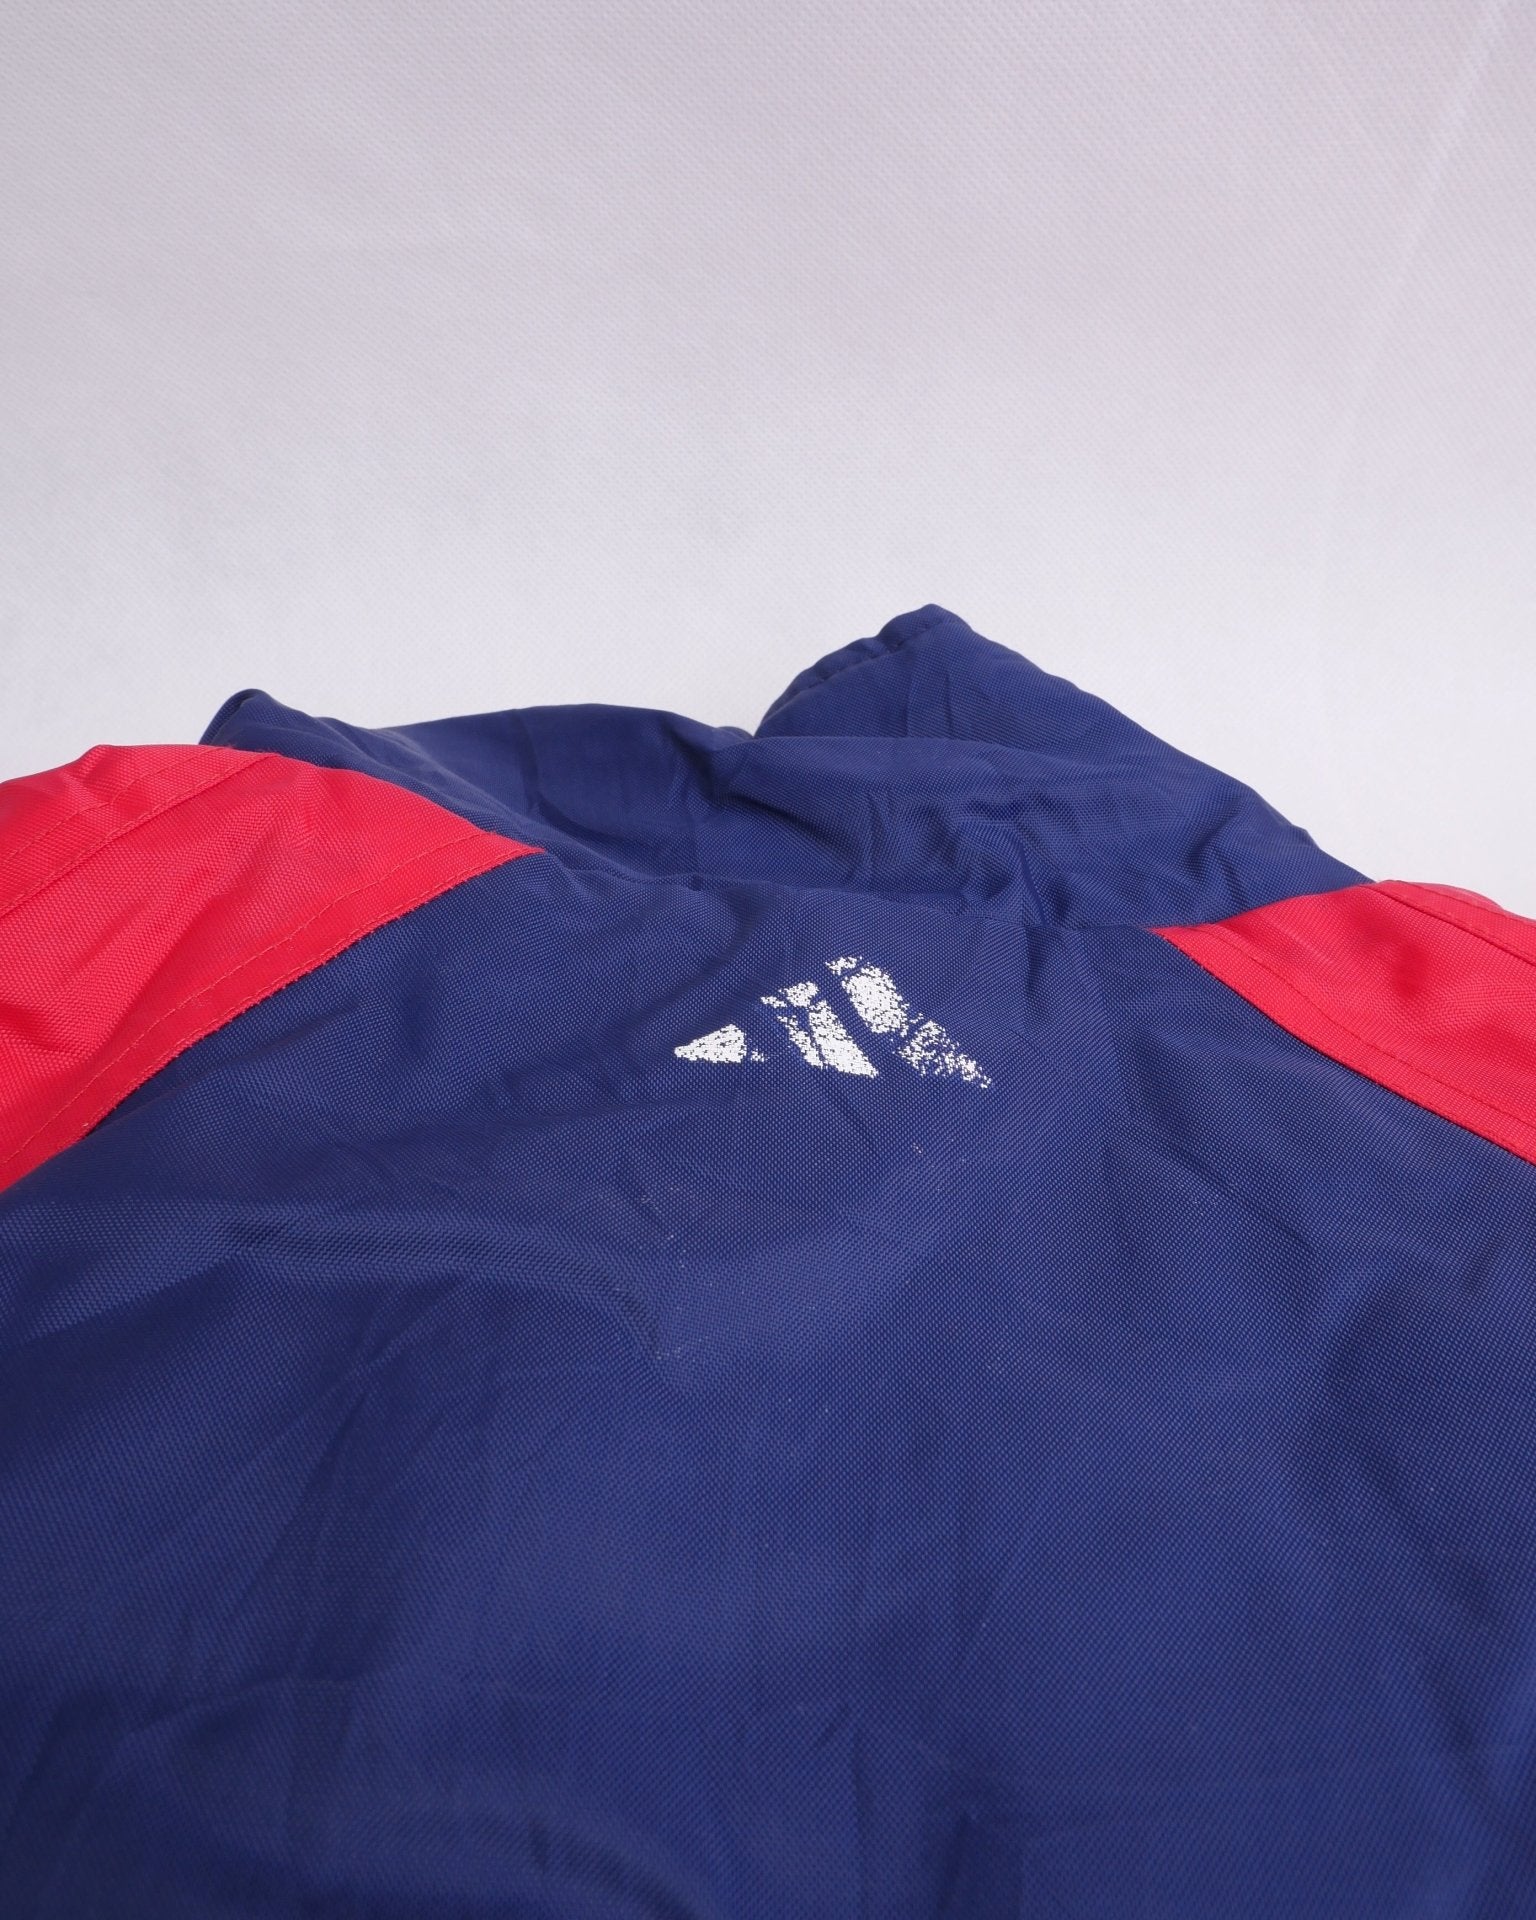 Adidas printed Logo two toned Vintage heavy Jacke - Peeces